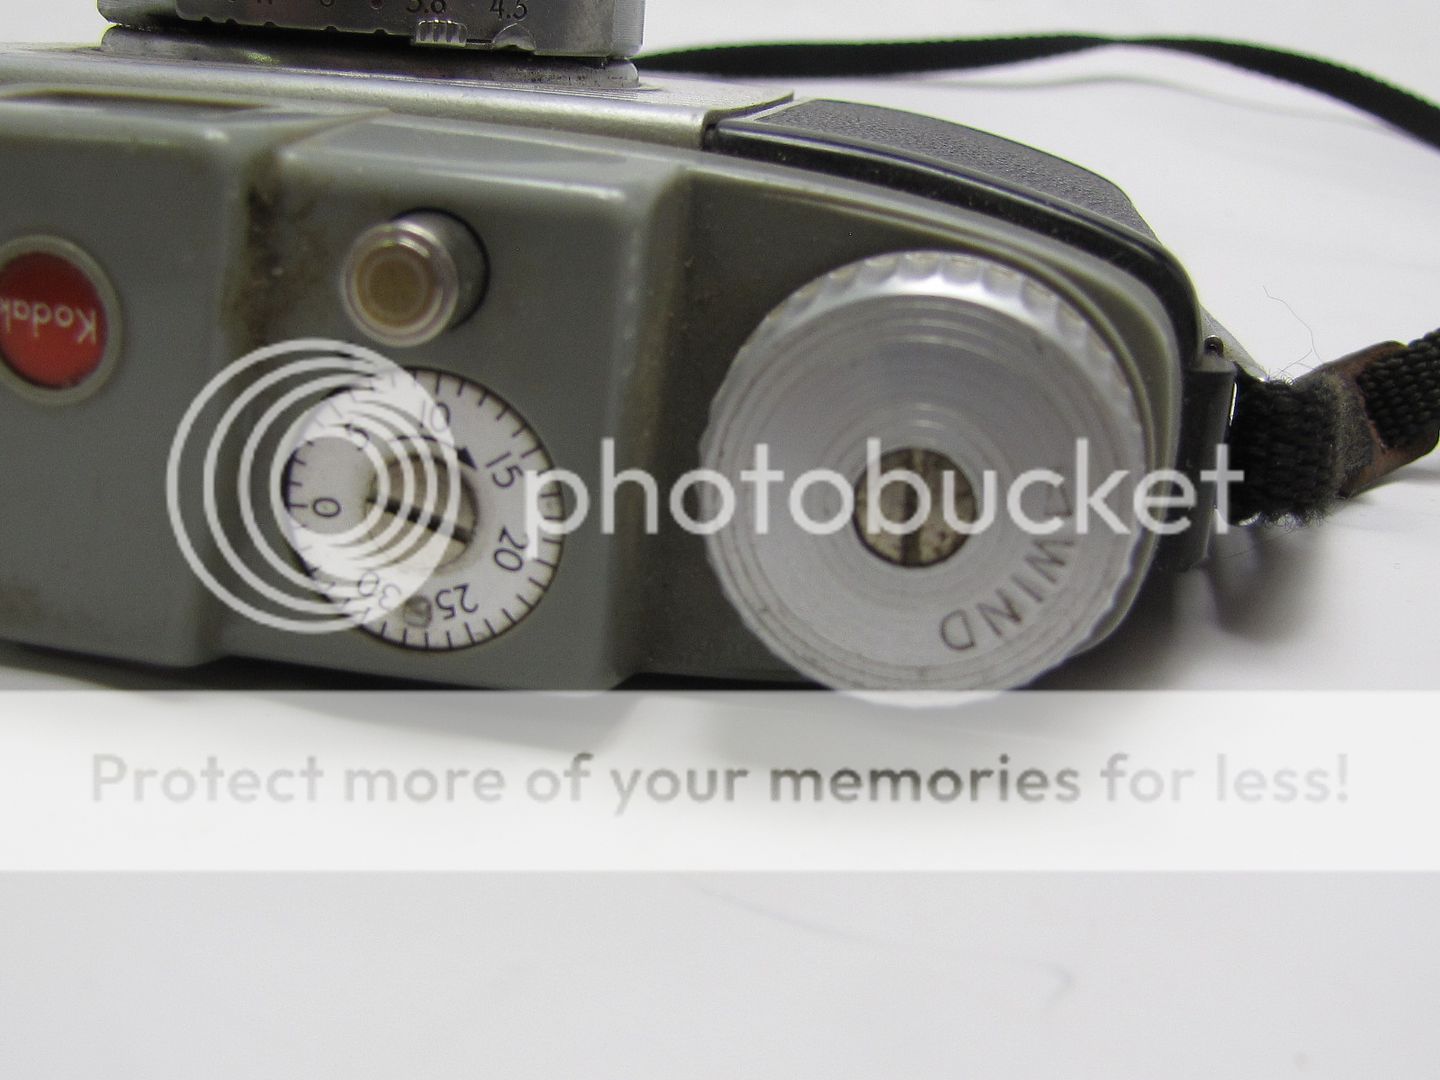 Vintage Pony 135 Kodak Flash Camera 200 Shutter PARTS ONLY  